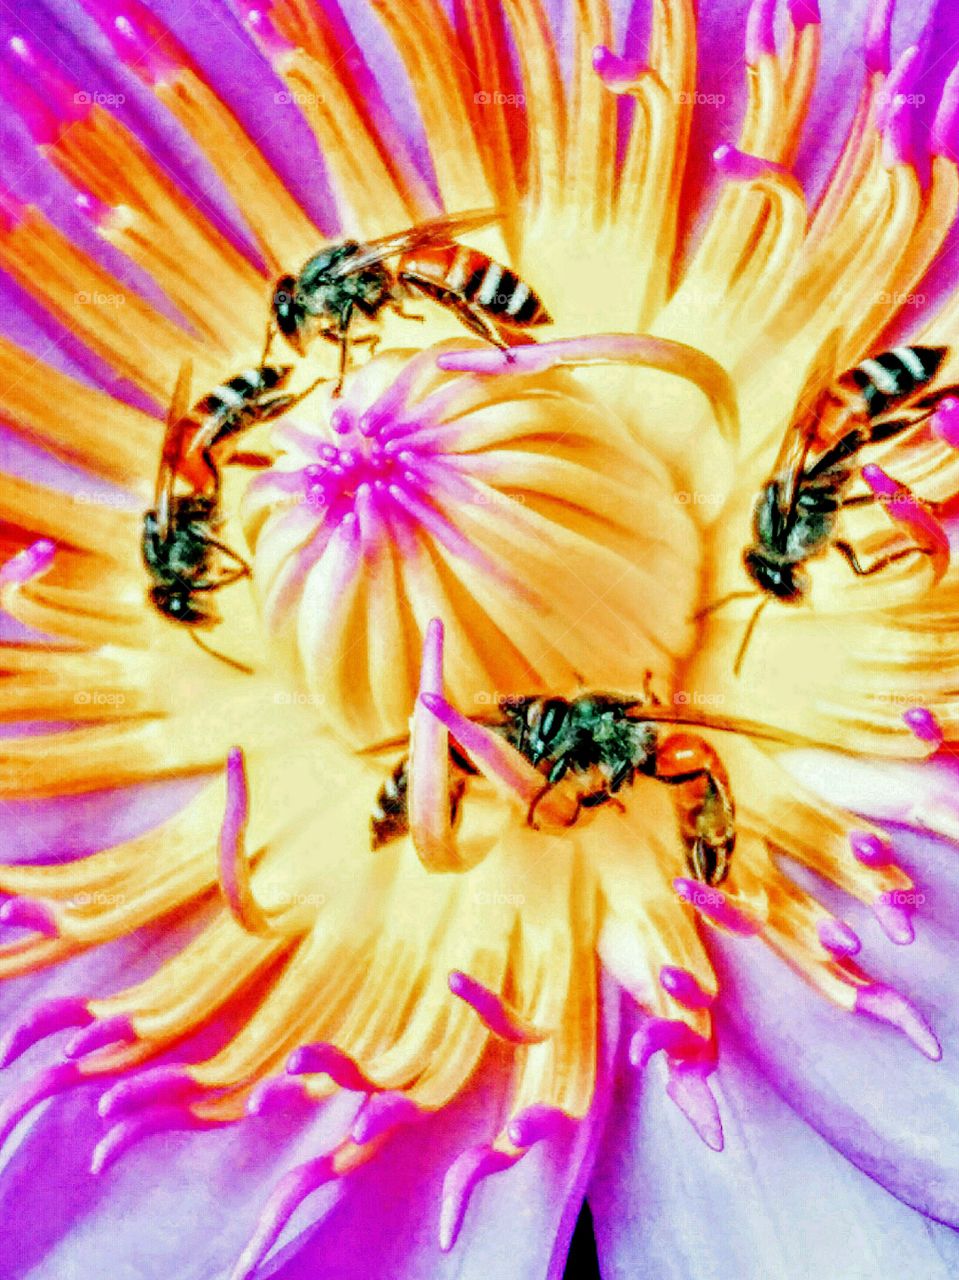 Bees sucking nectar